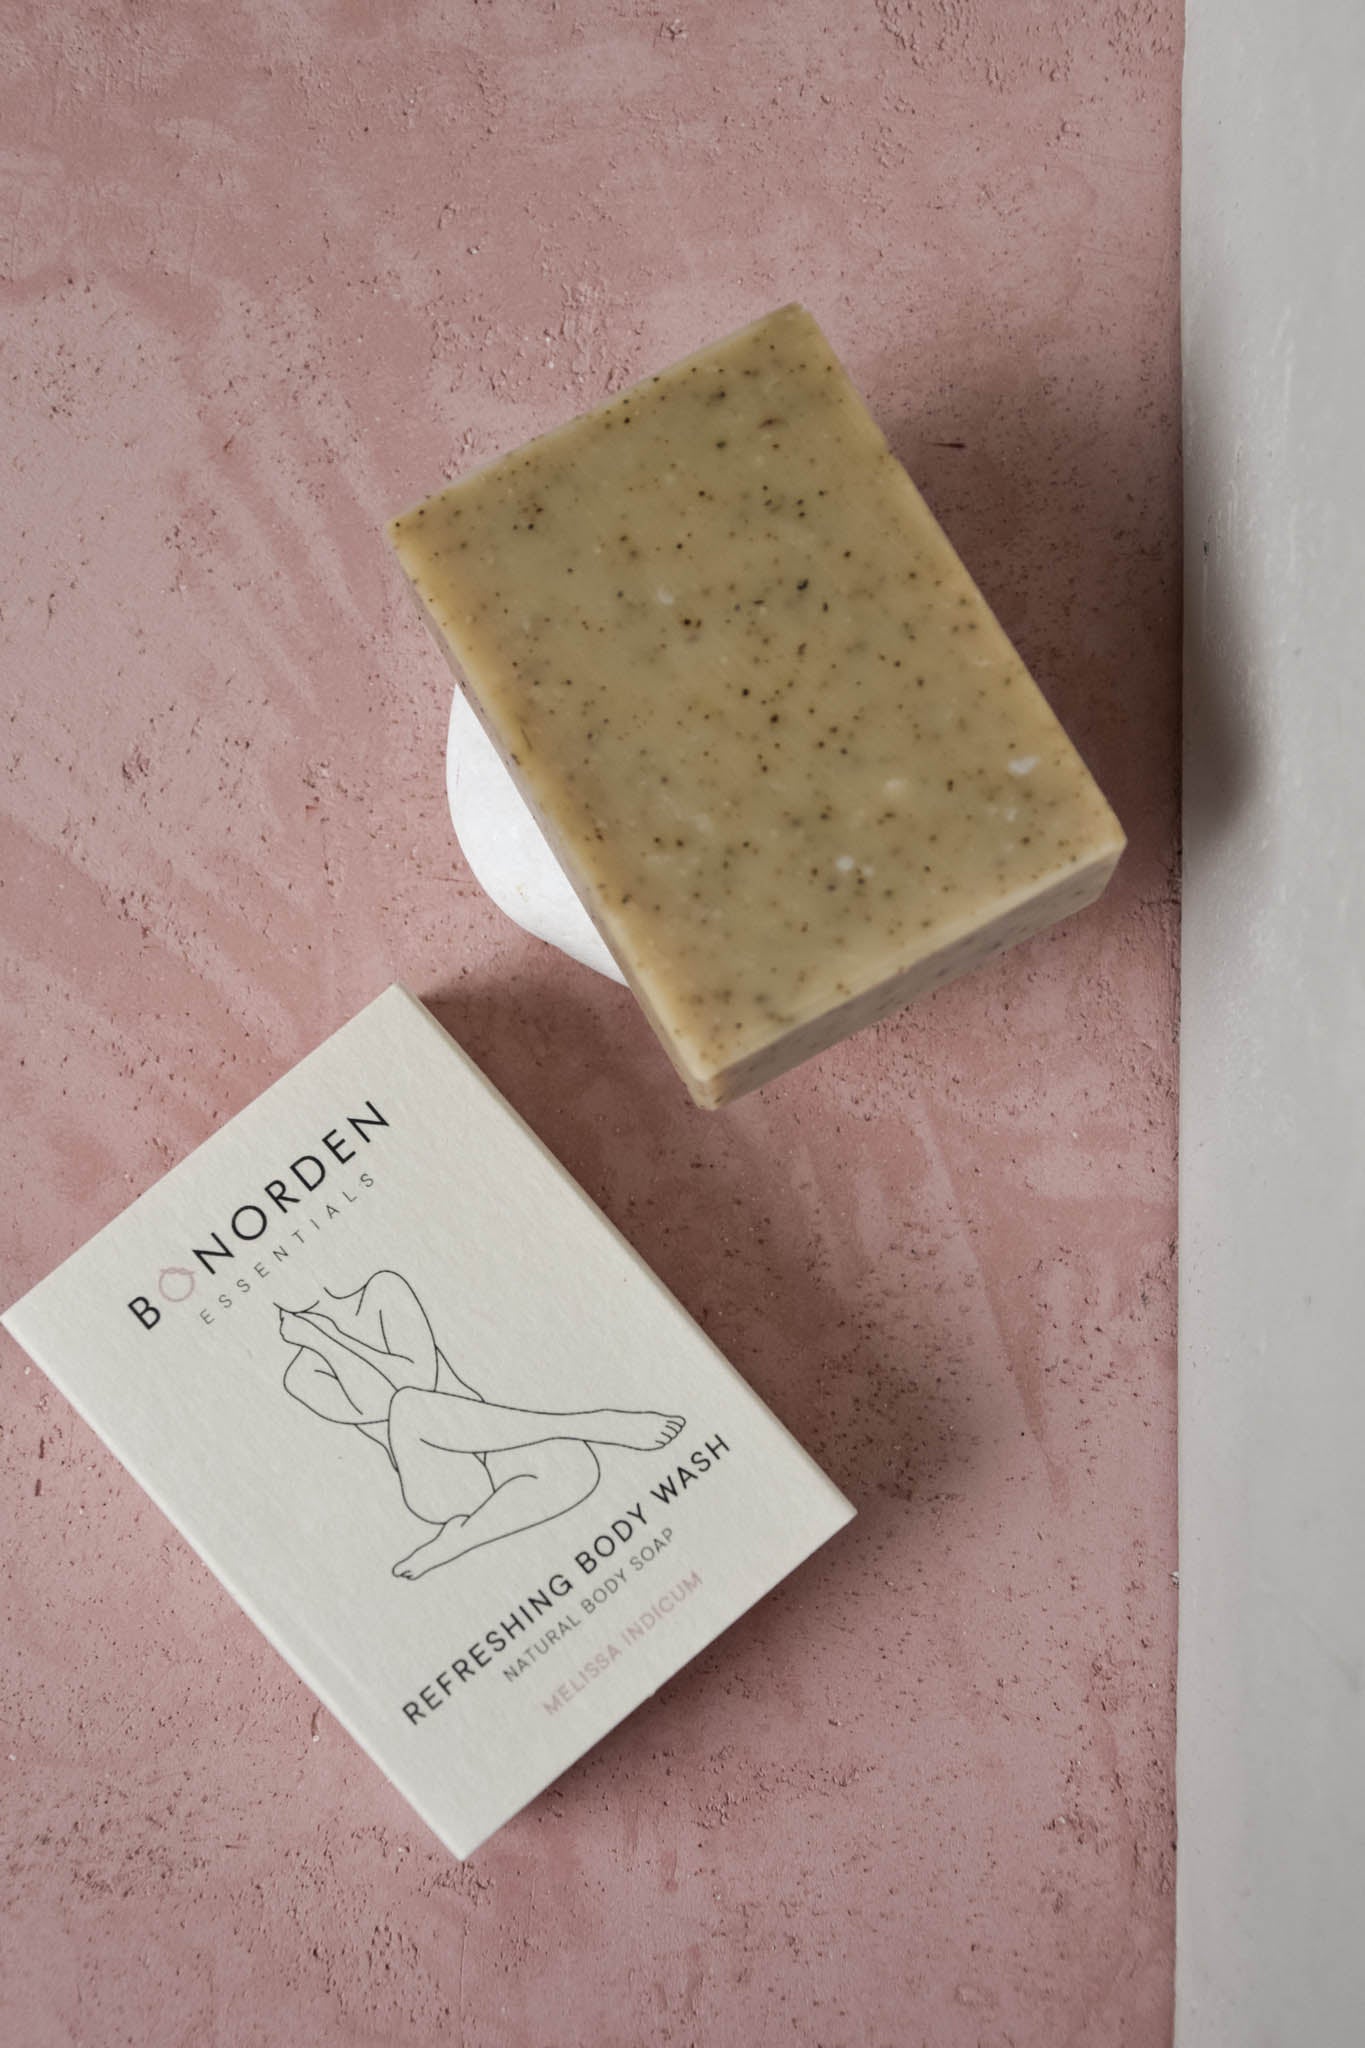 Bonorden Essentials - Duschseife "Refreshing Body Wash" - Leja Concept Store